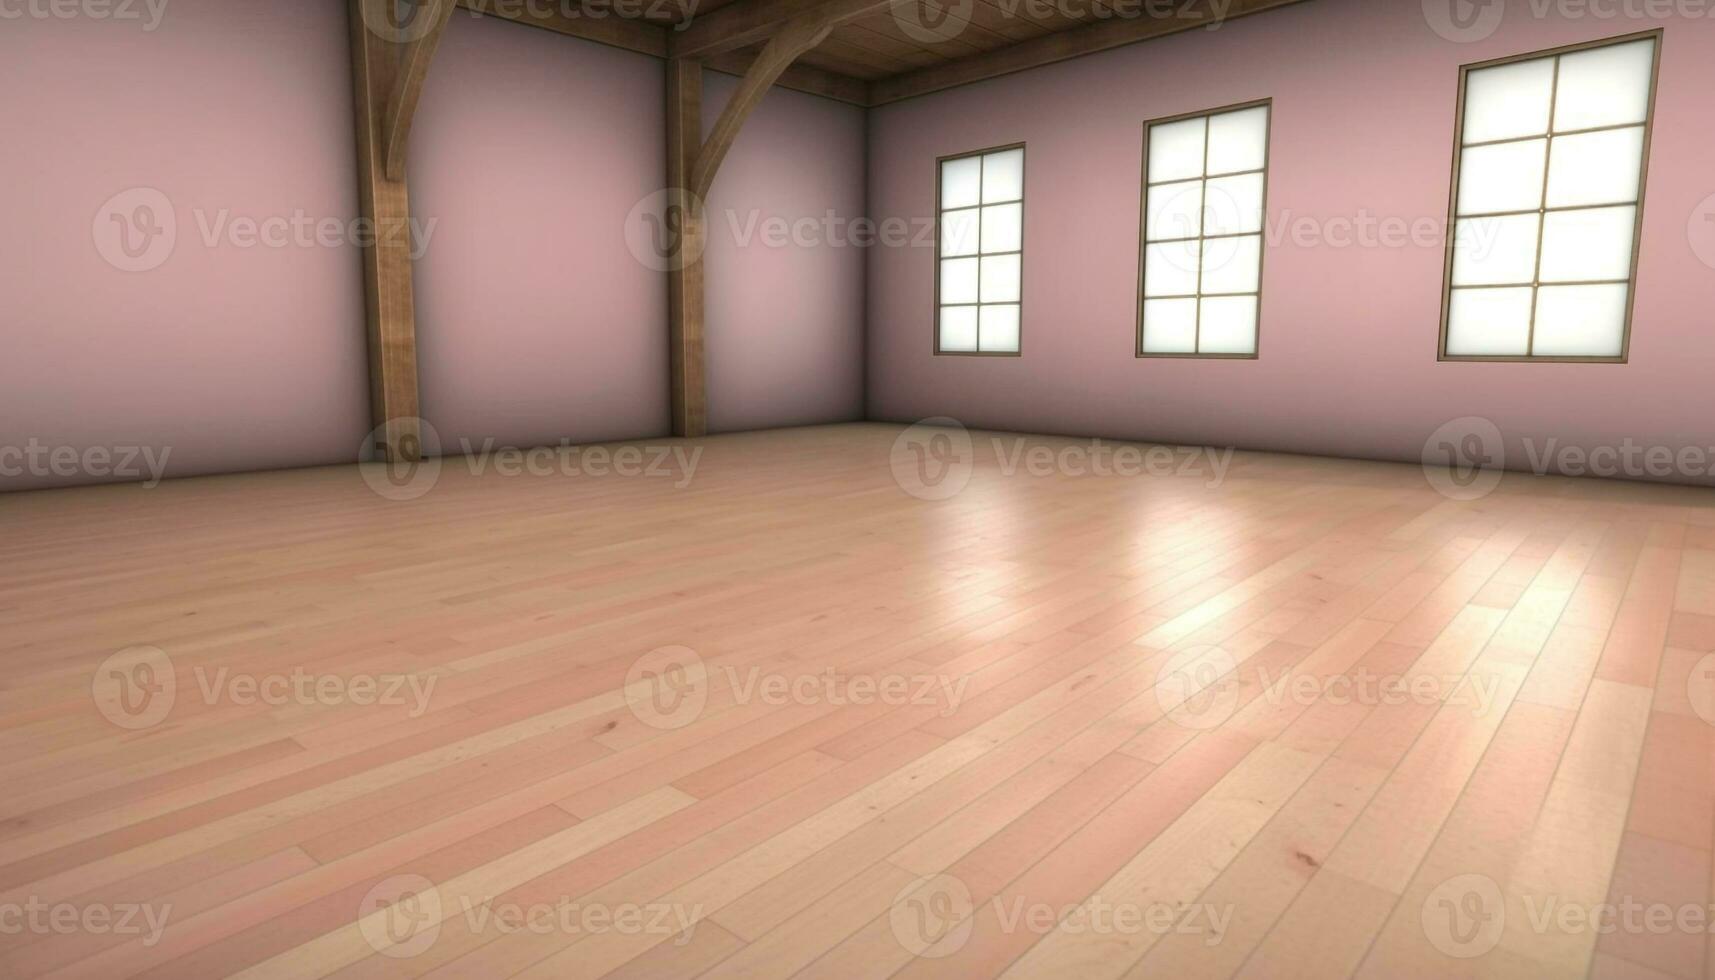 Modern parquet flooring design illuminates empty loft apartment interior generated by AI photo